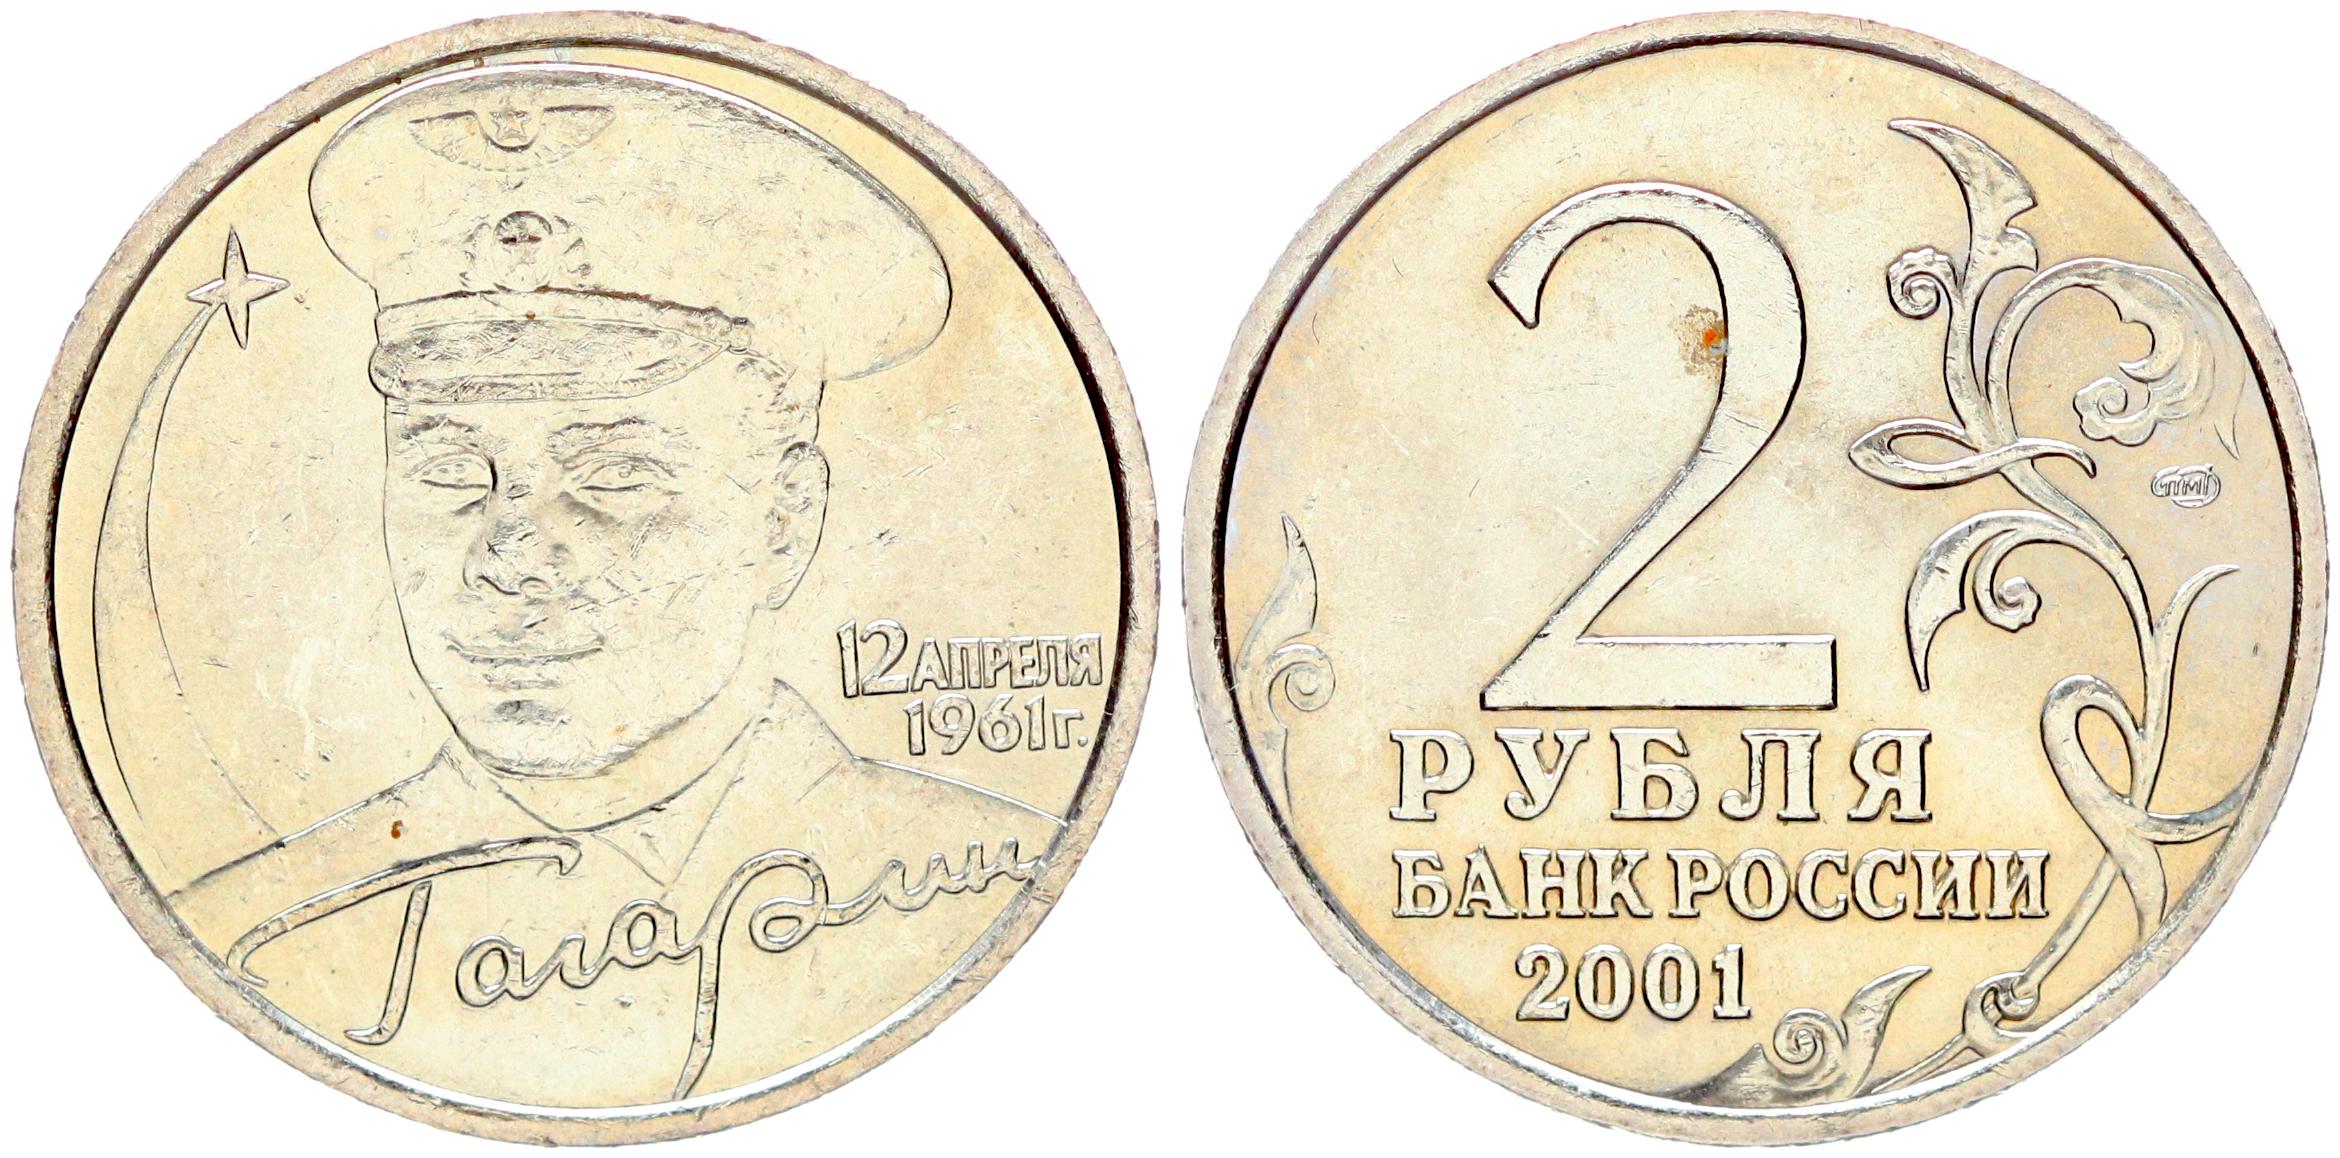 Деньги 2. 2 Рубля 2001 Гагарин. Монета 2р 2001 Гагарин. 2 Рубля Гагарин ММД. Двухрублевая монета с Гагариным 2001 год.